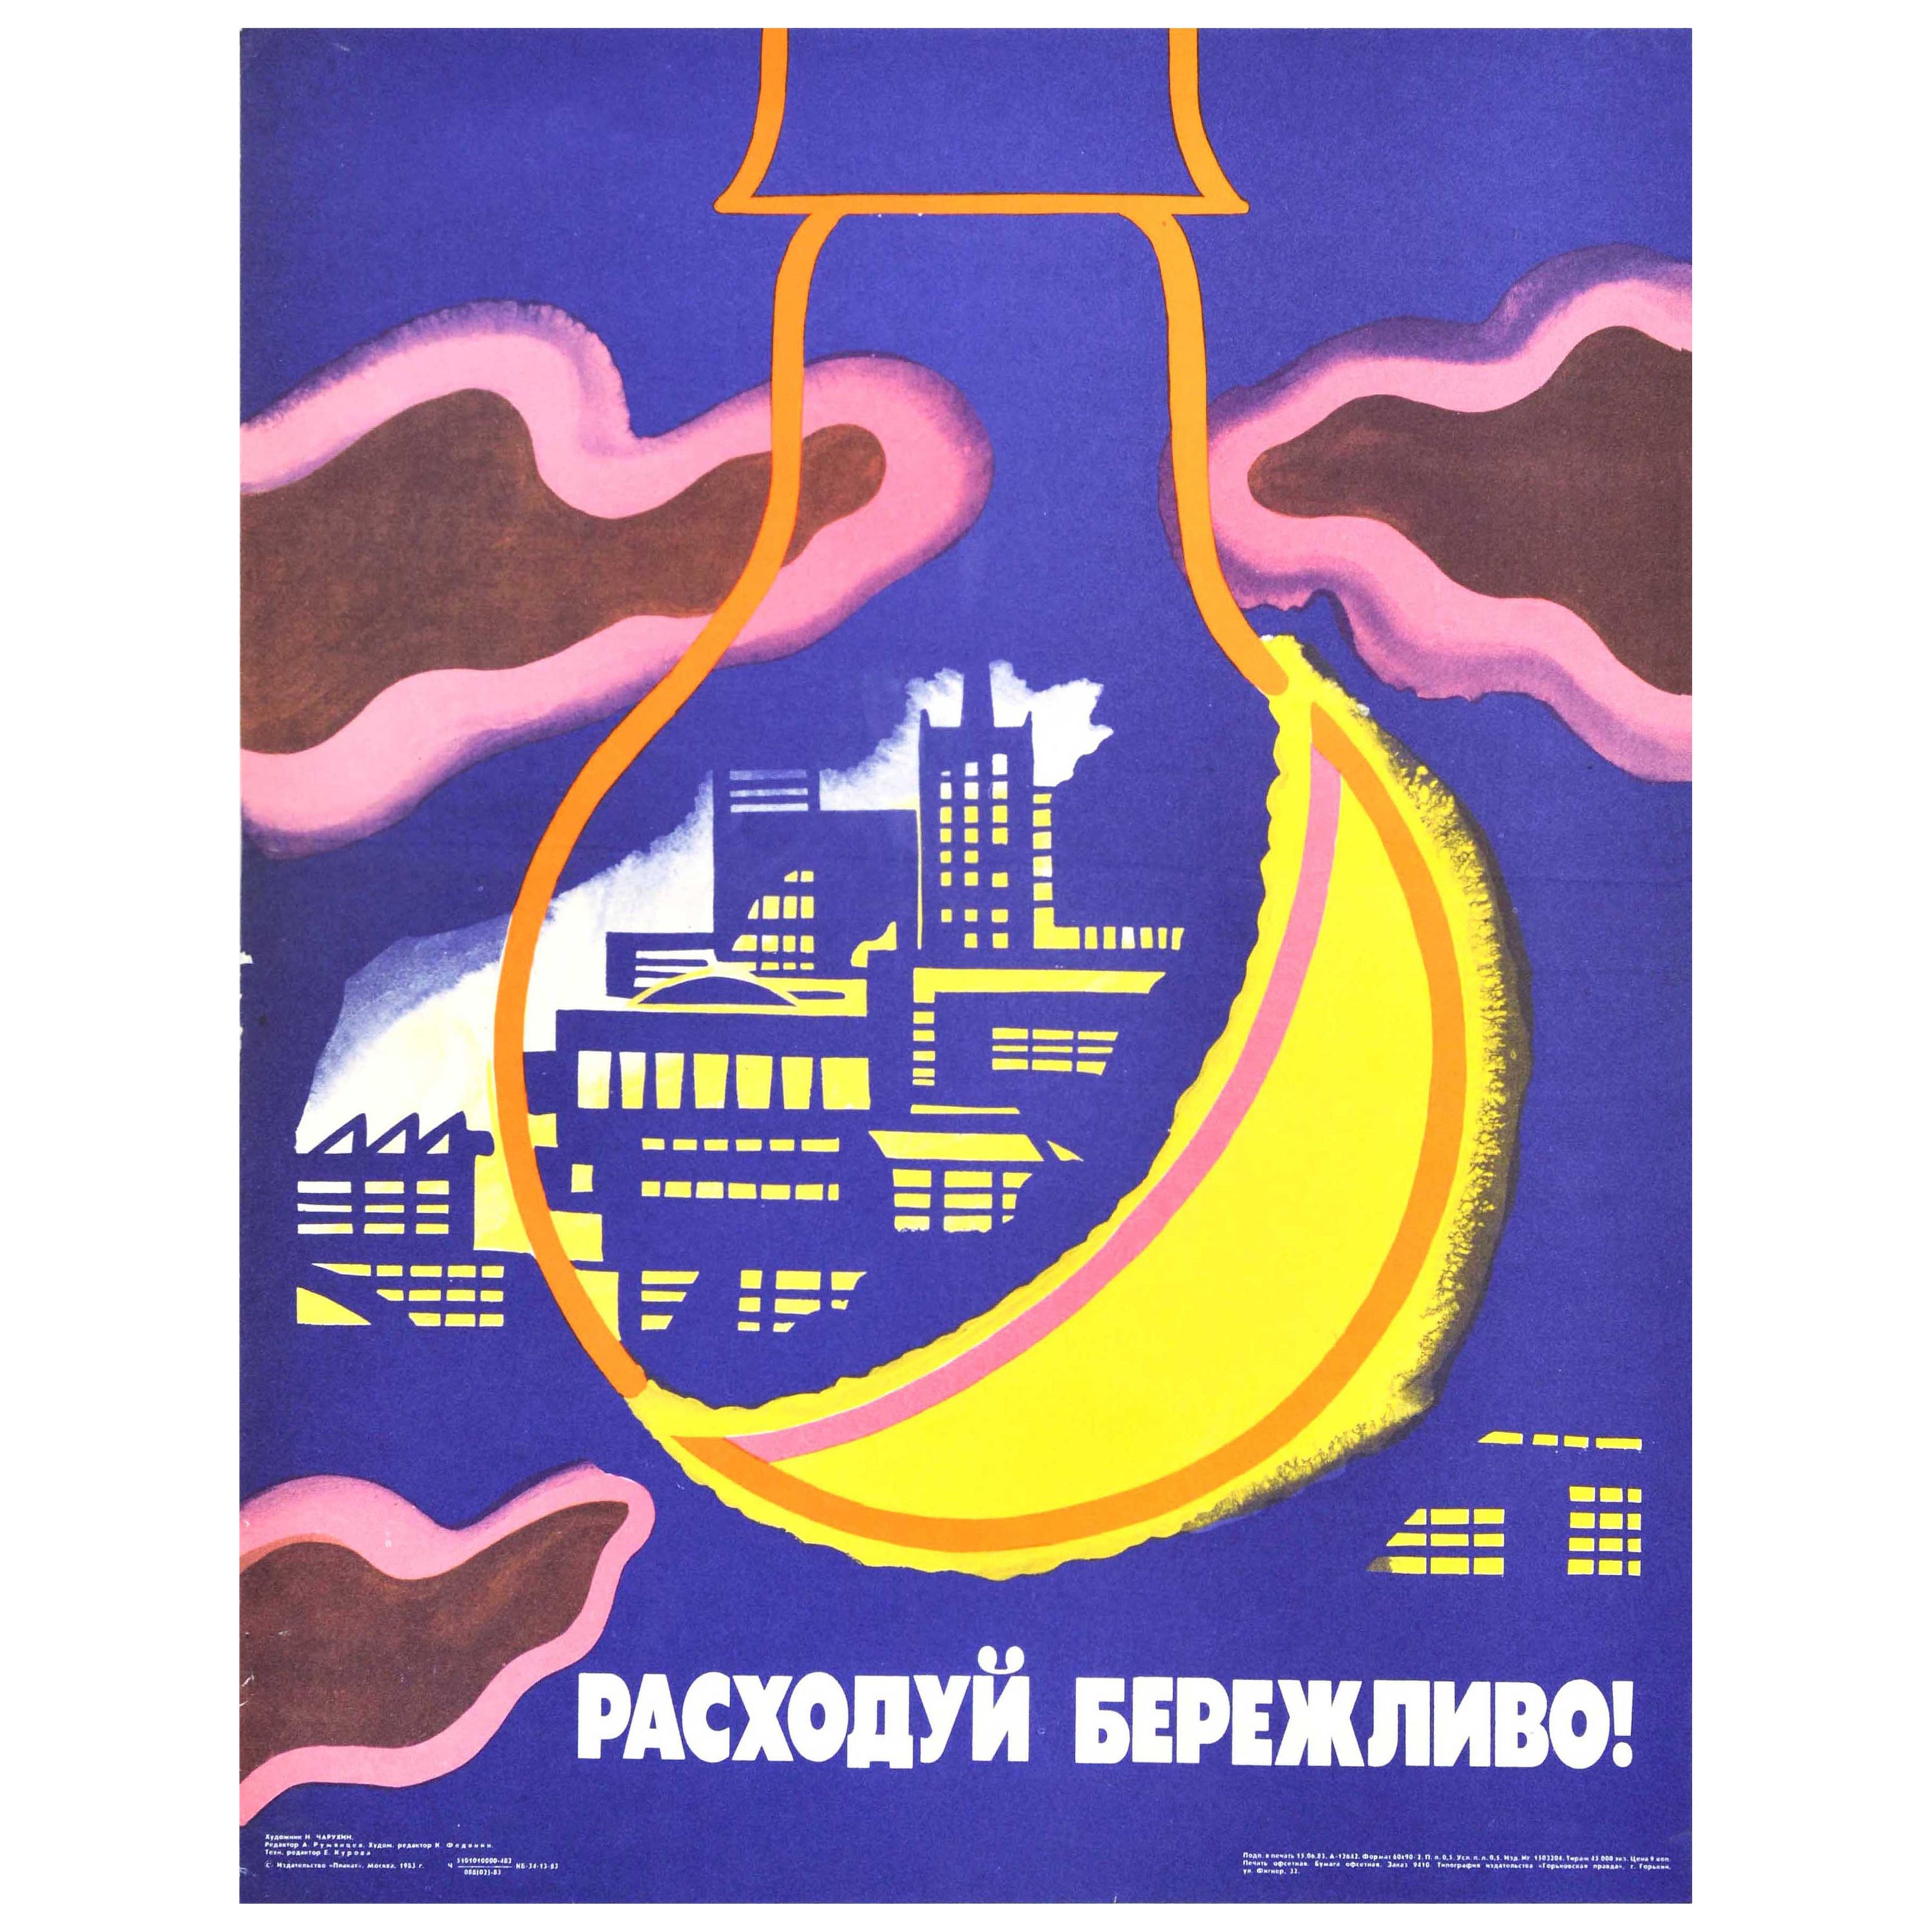 Original Vintage Poster Spend Wisely Save Energy Electricity City Lights Design For Sale